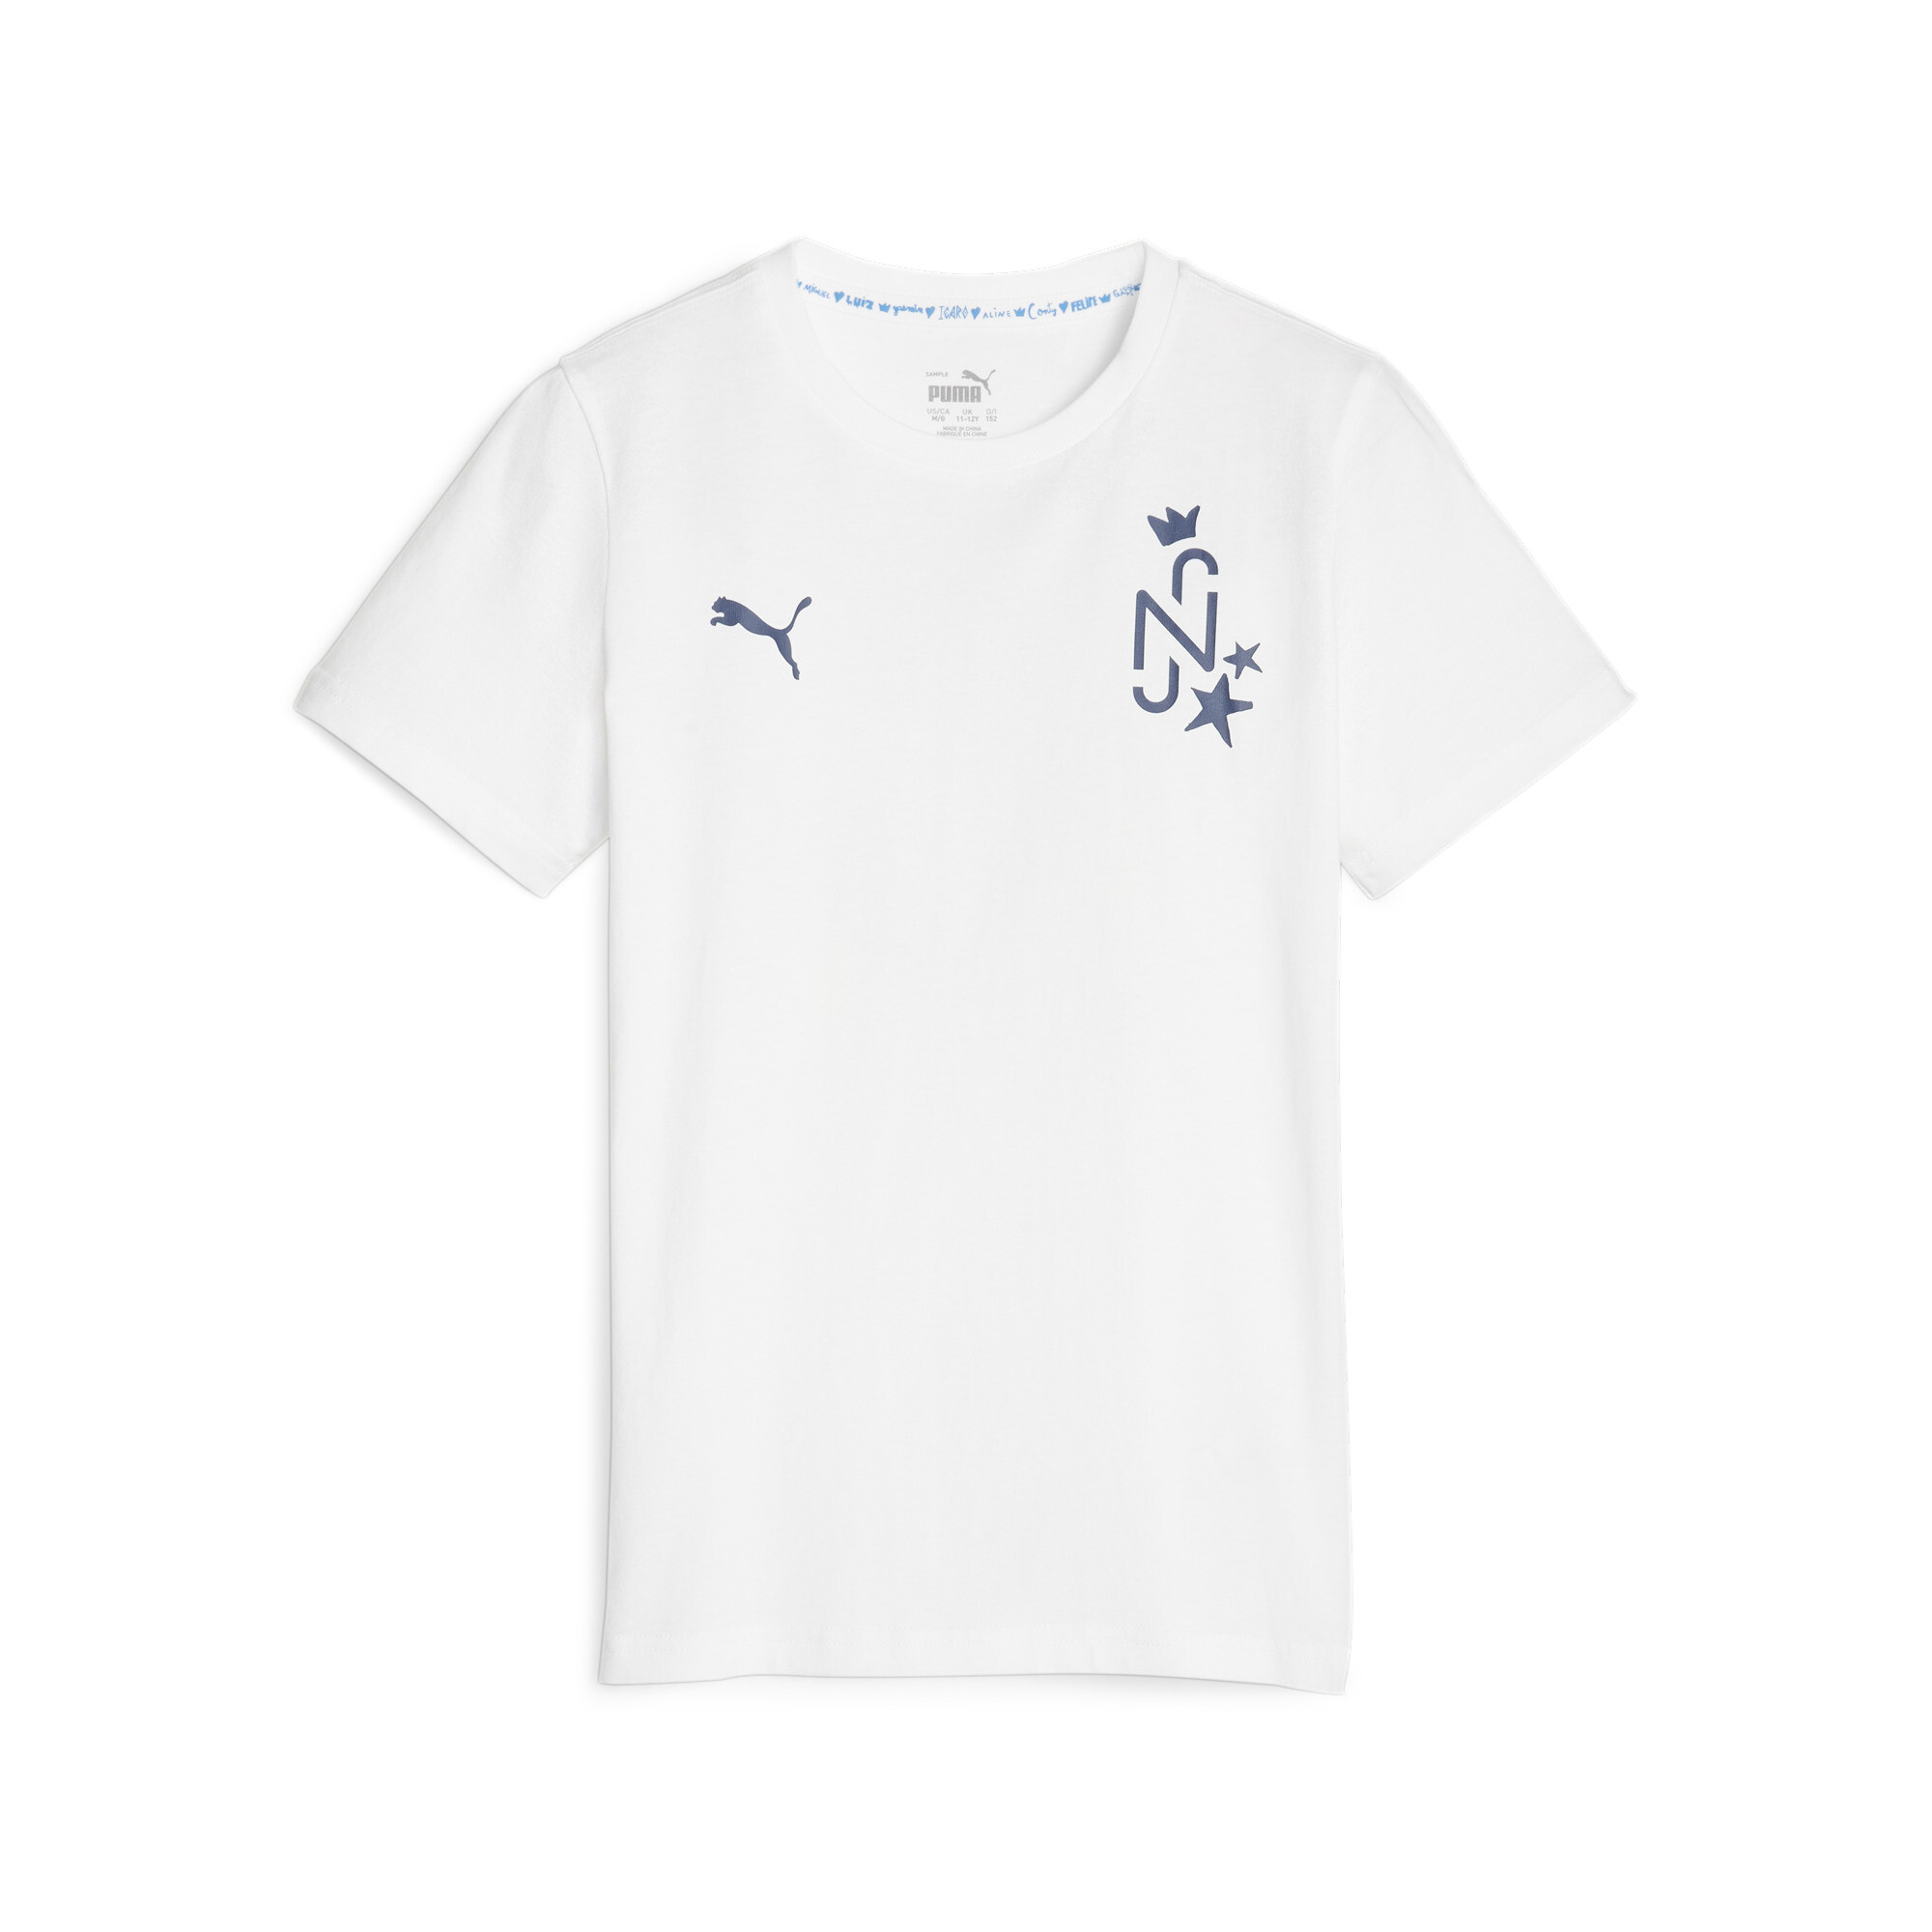 PUMA Neymar Jr Football T-Shirt In White, Size 5-6 Youth